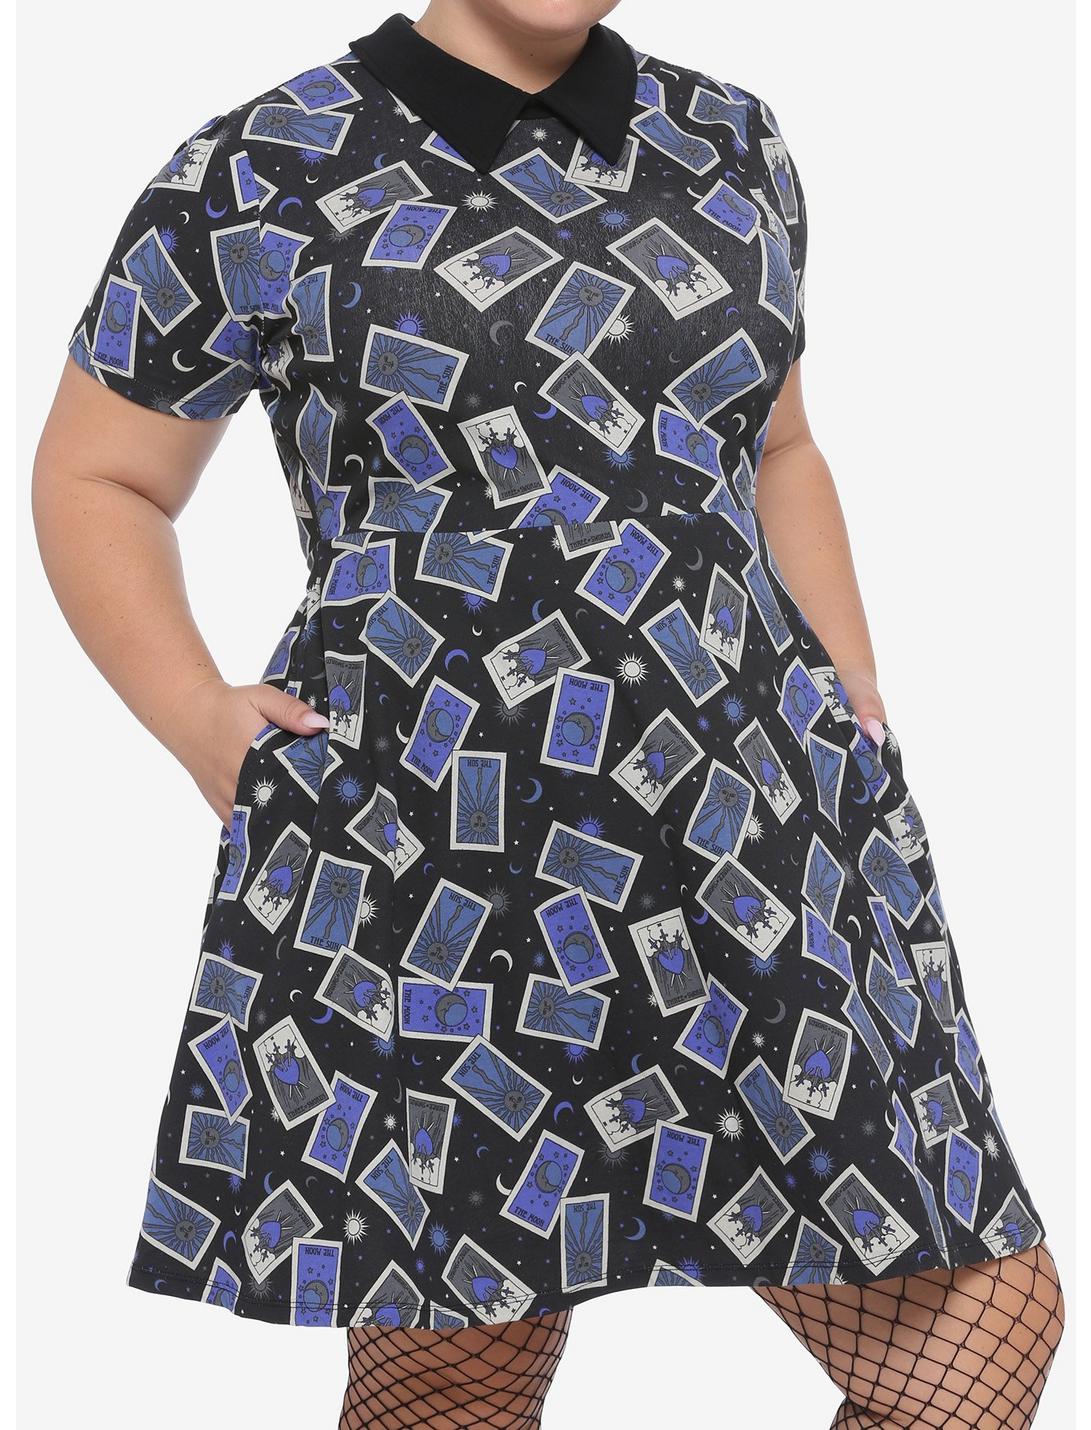 Black & Blue Tarot Cards Collared Dress Plus Size, MULTI, hi-res